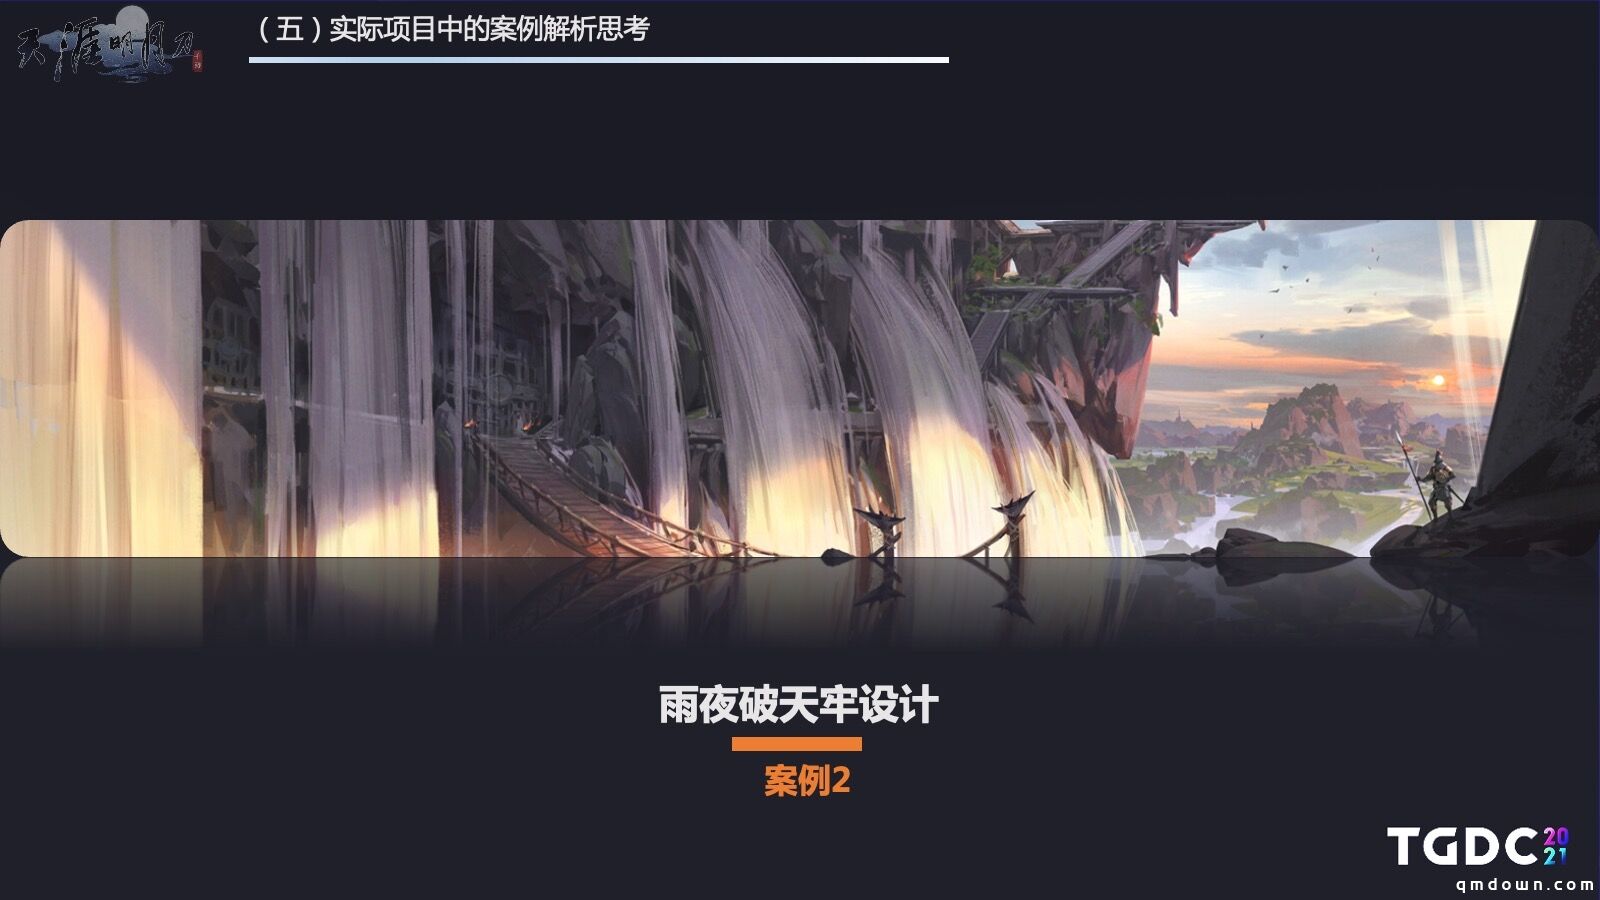 TGDC | 《天涯明月刀》场景原画负责人李志飞：天刀场景设计的艺术化写实思维